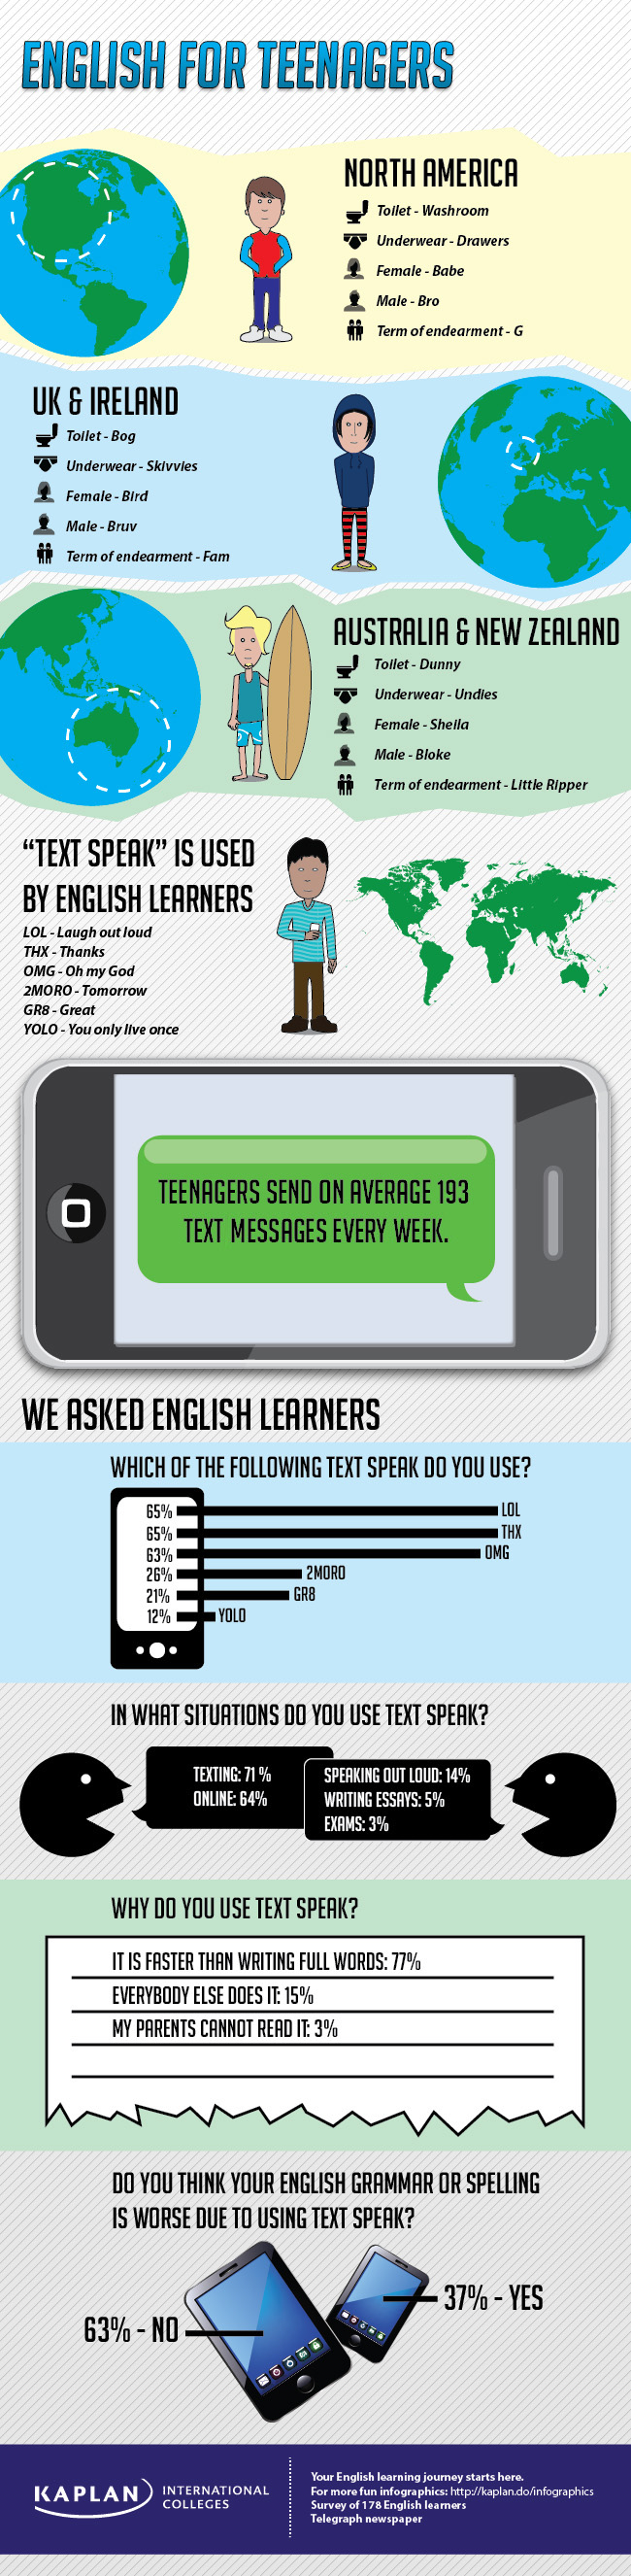 English for teenagers